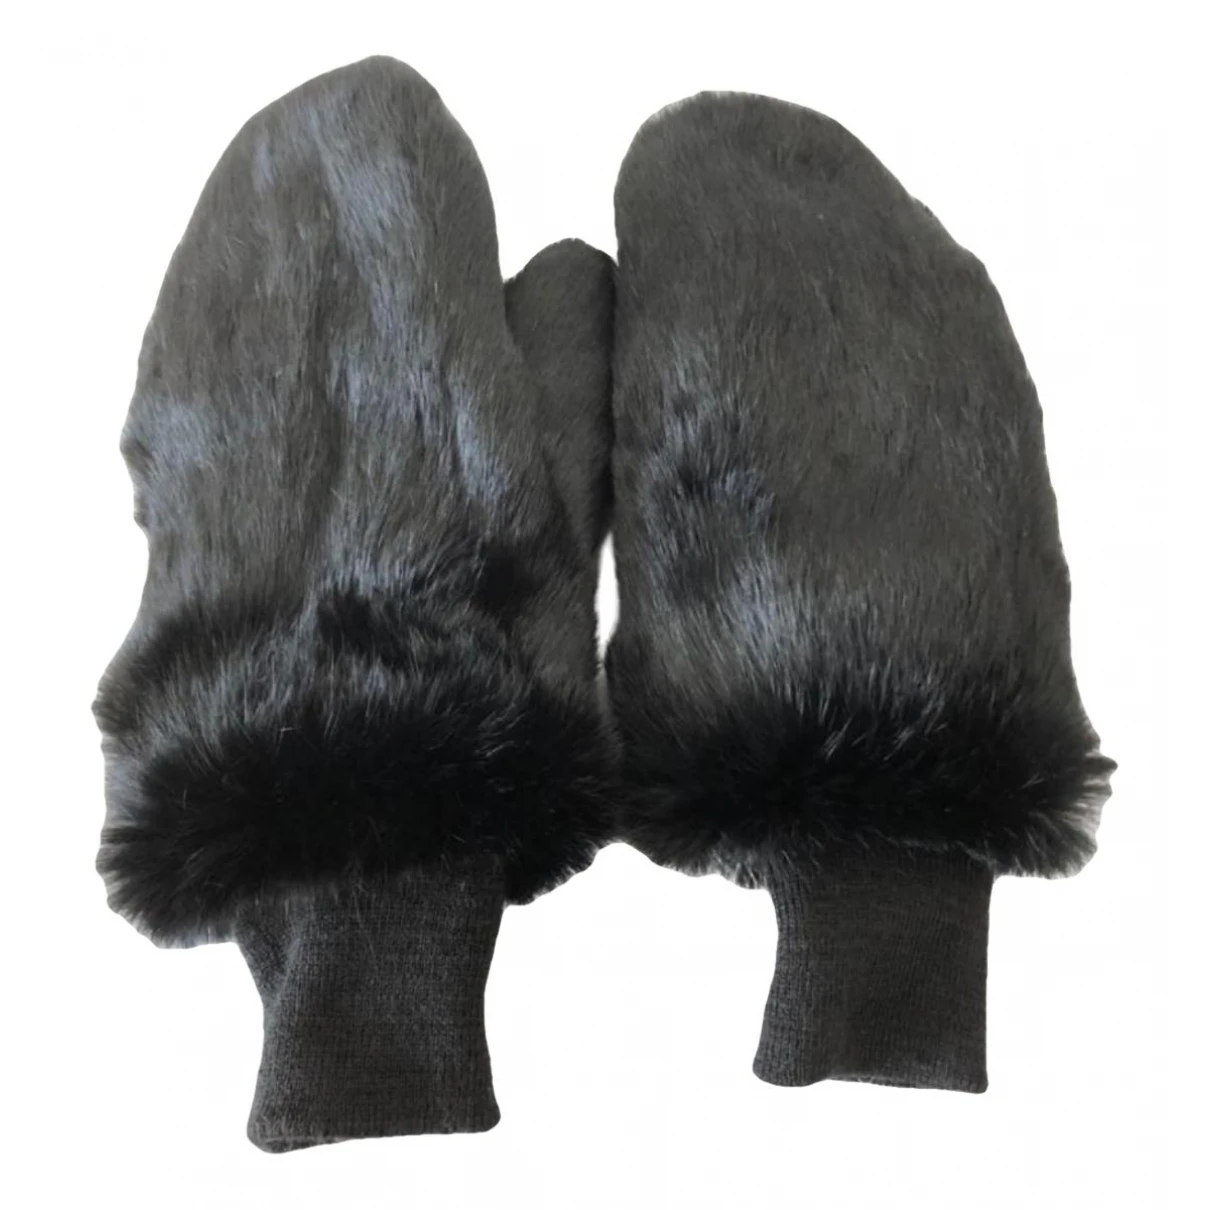 accessories Adrienne Landau gloves for Female Rabbit S International. Used condition